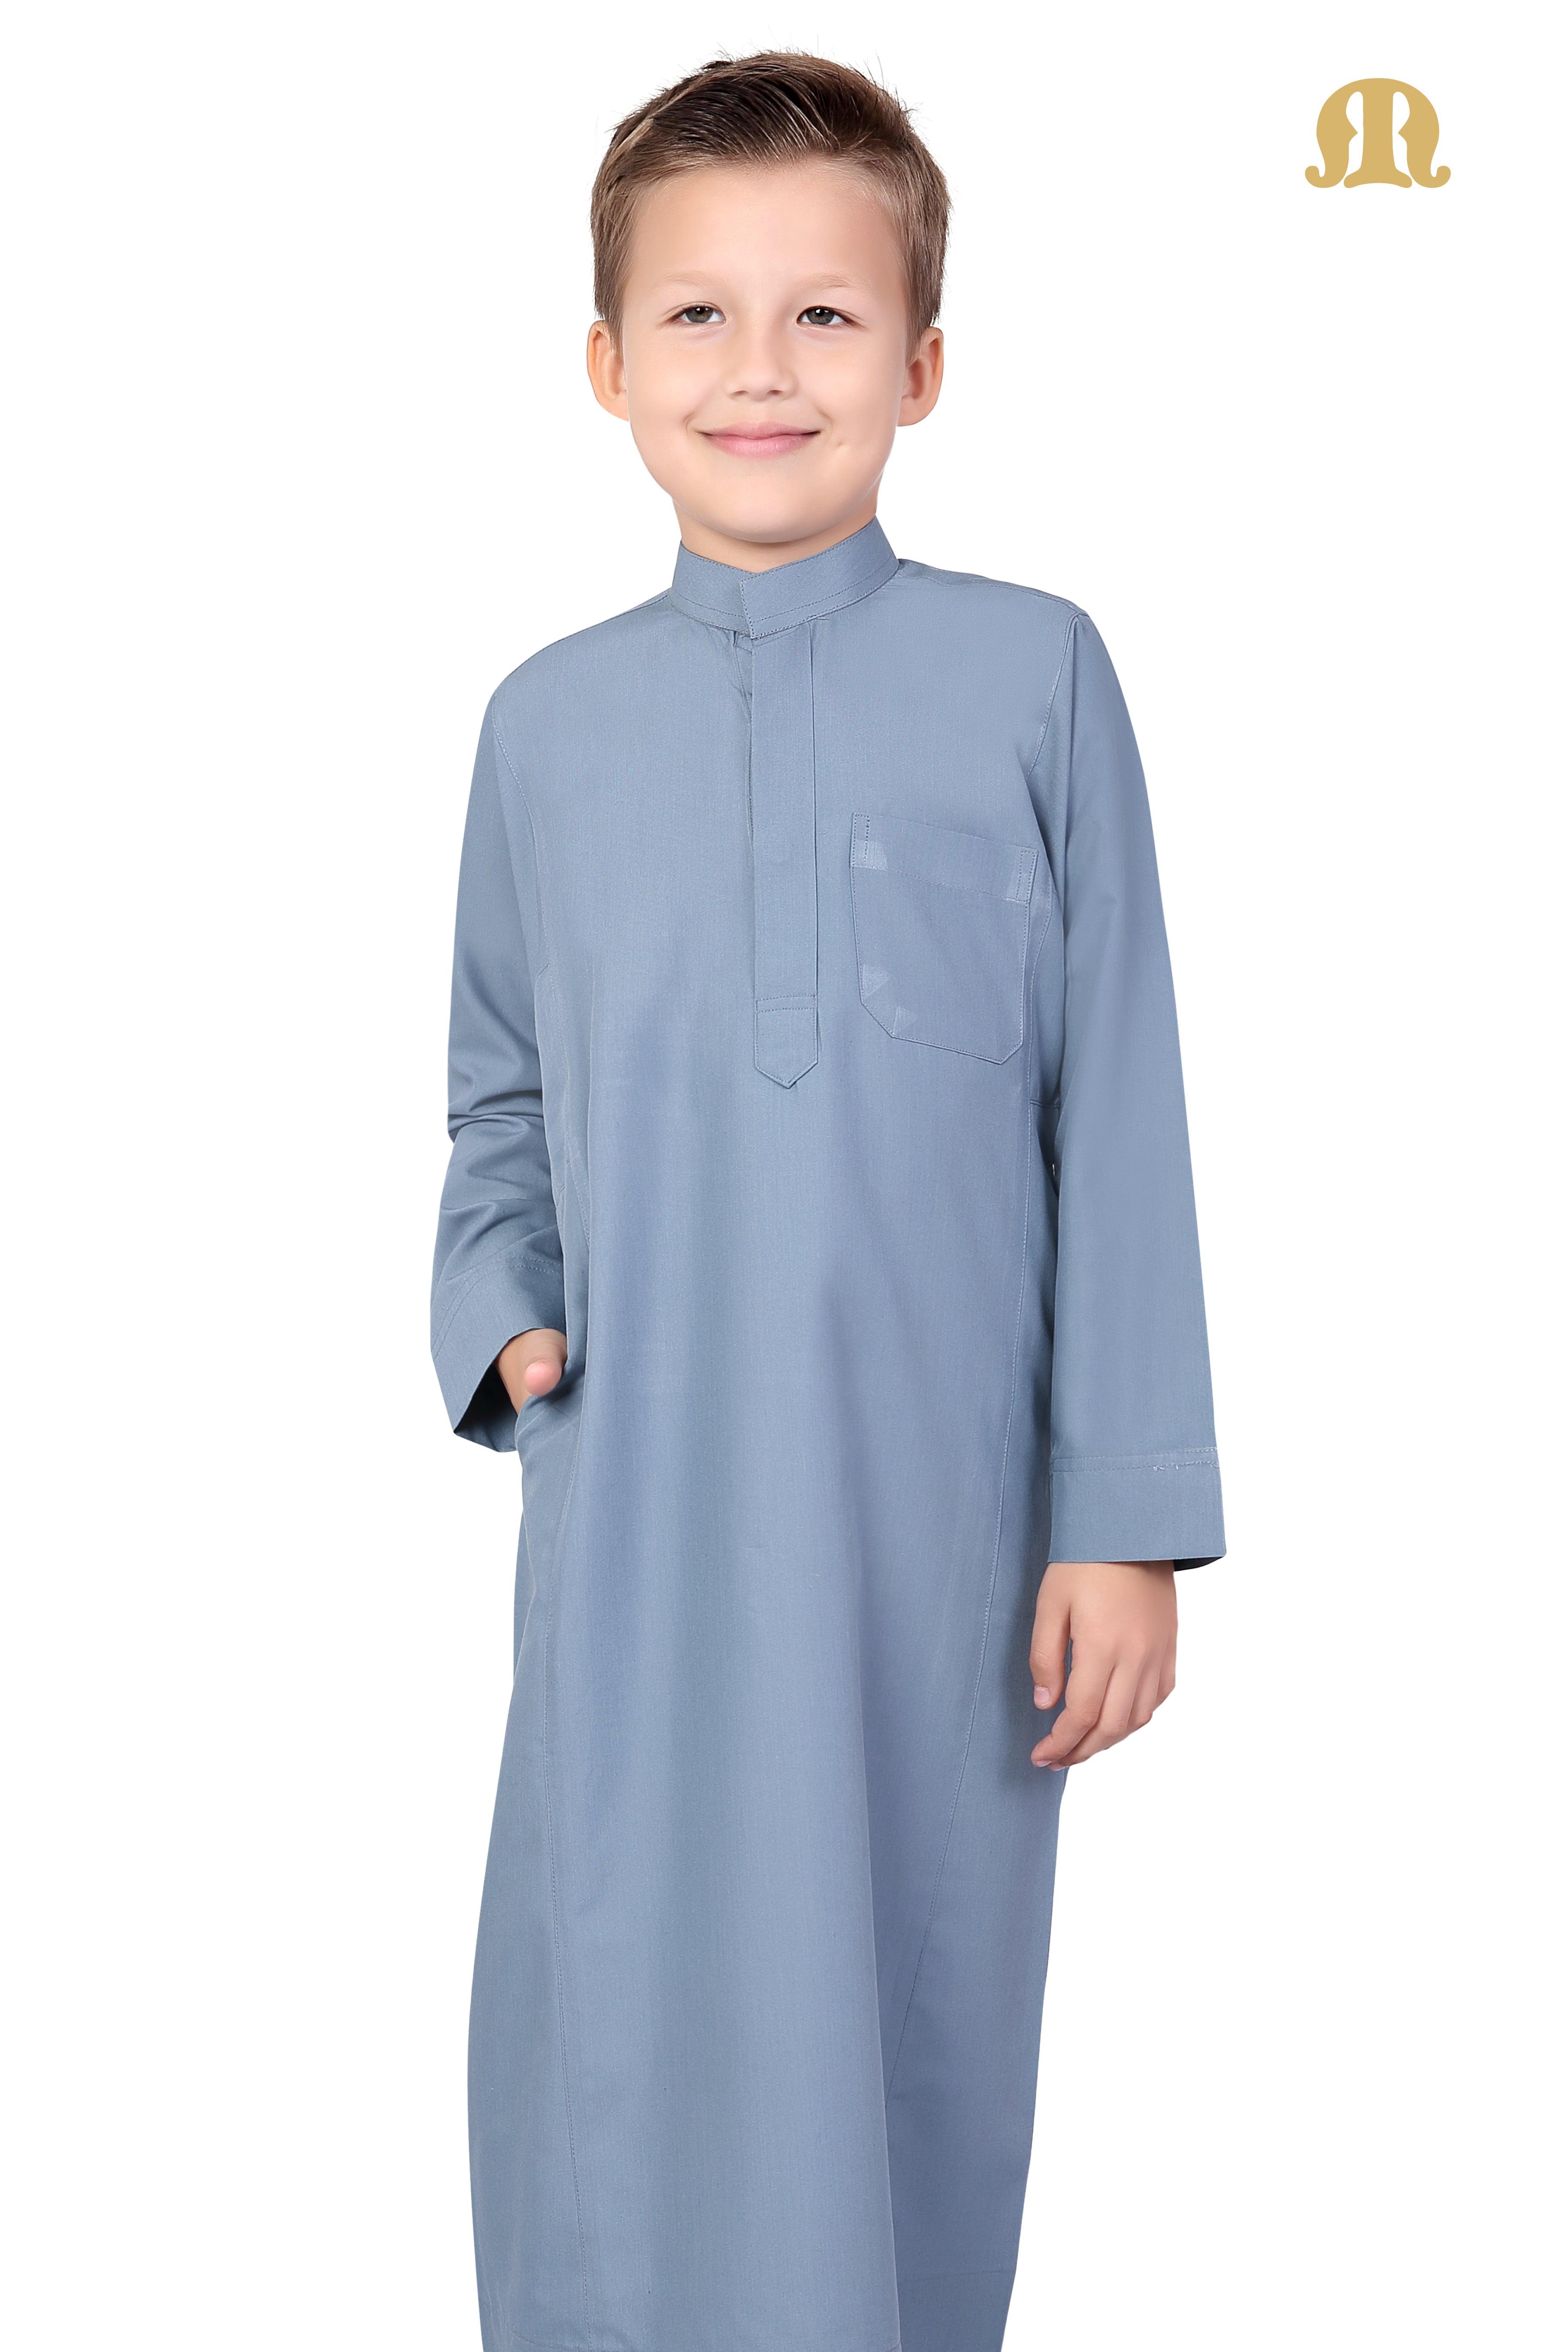 Powder Blue Aplos Saudi Thobe for Kids - Mashroo